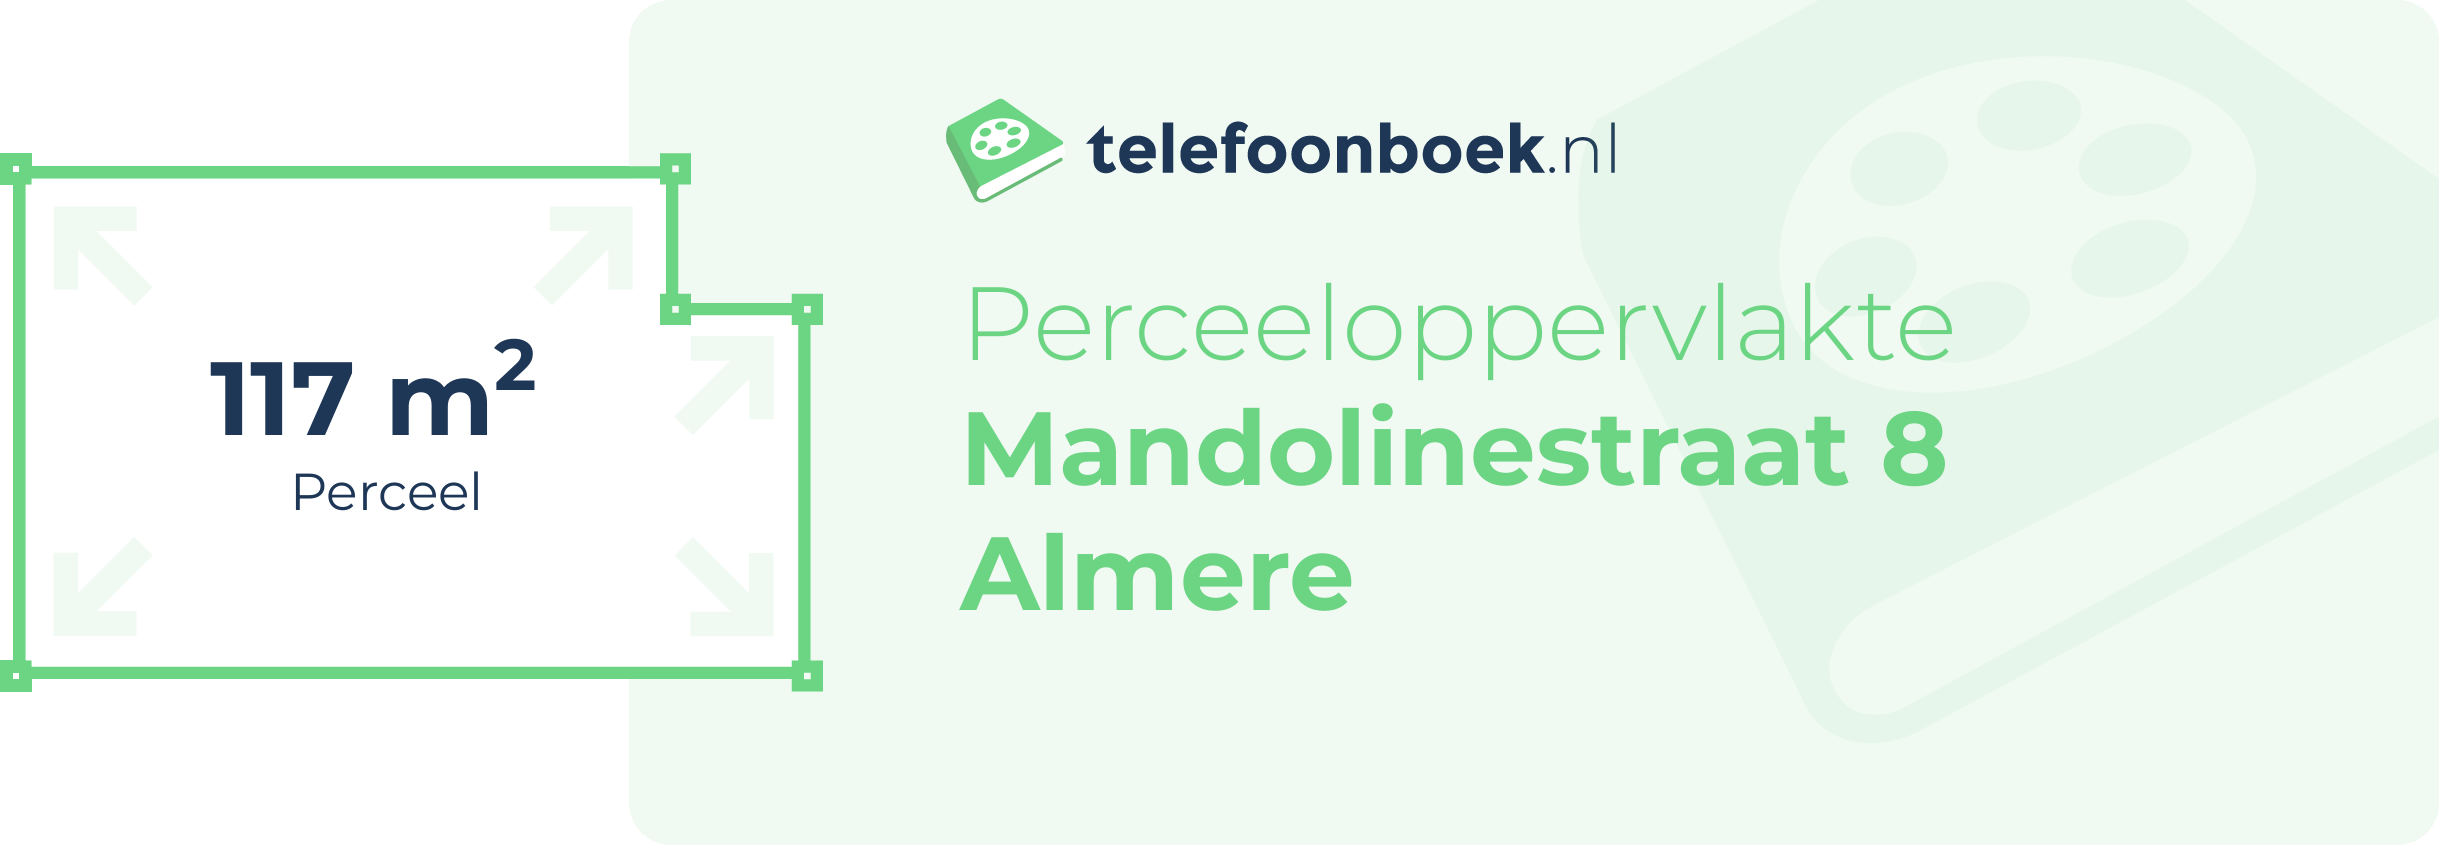 Perceeloppervlakte Mandolinestraat 8 Almere